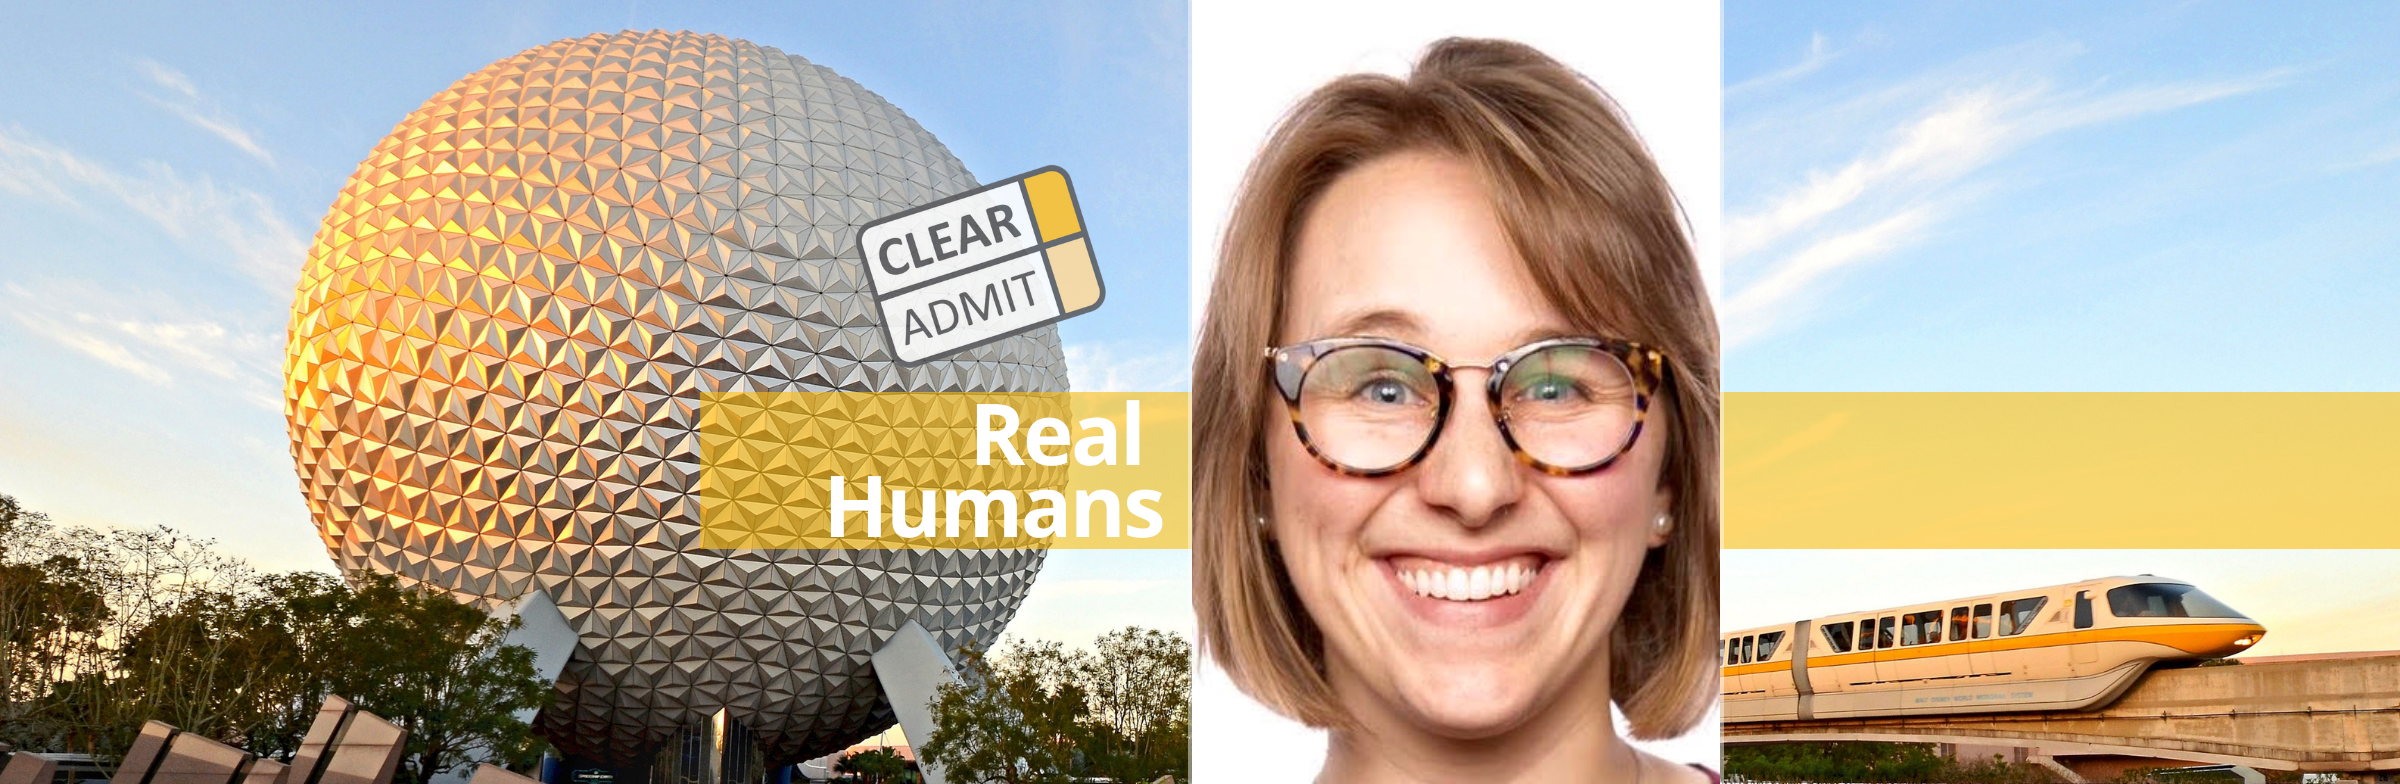 Image for Real Humans of Disney: Stephanie Sorensen, Chicago Booth Evening MBA ’20, Senior Associate